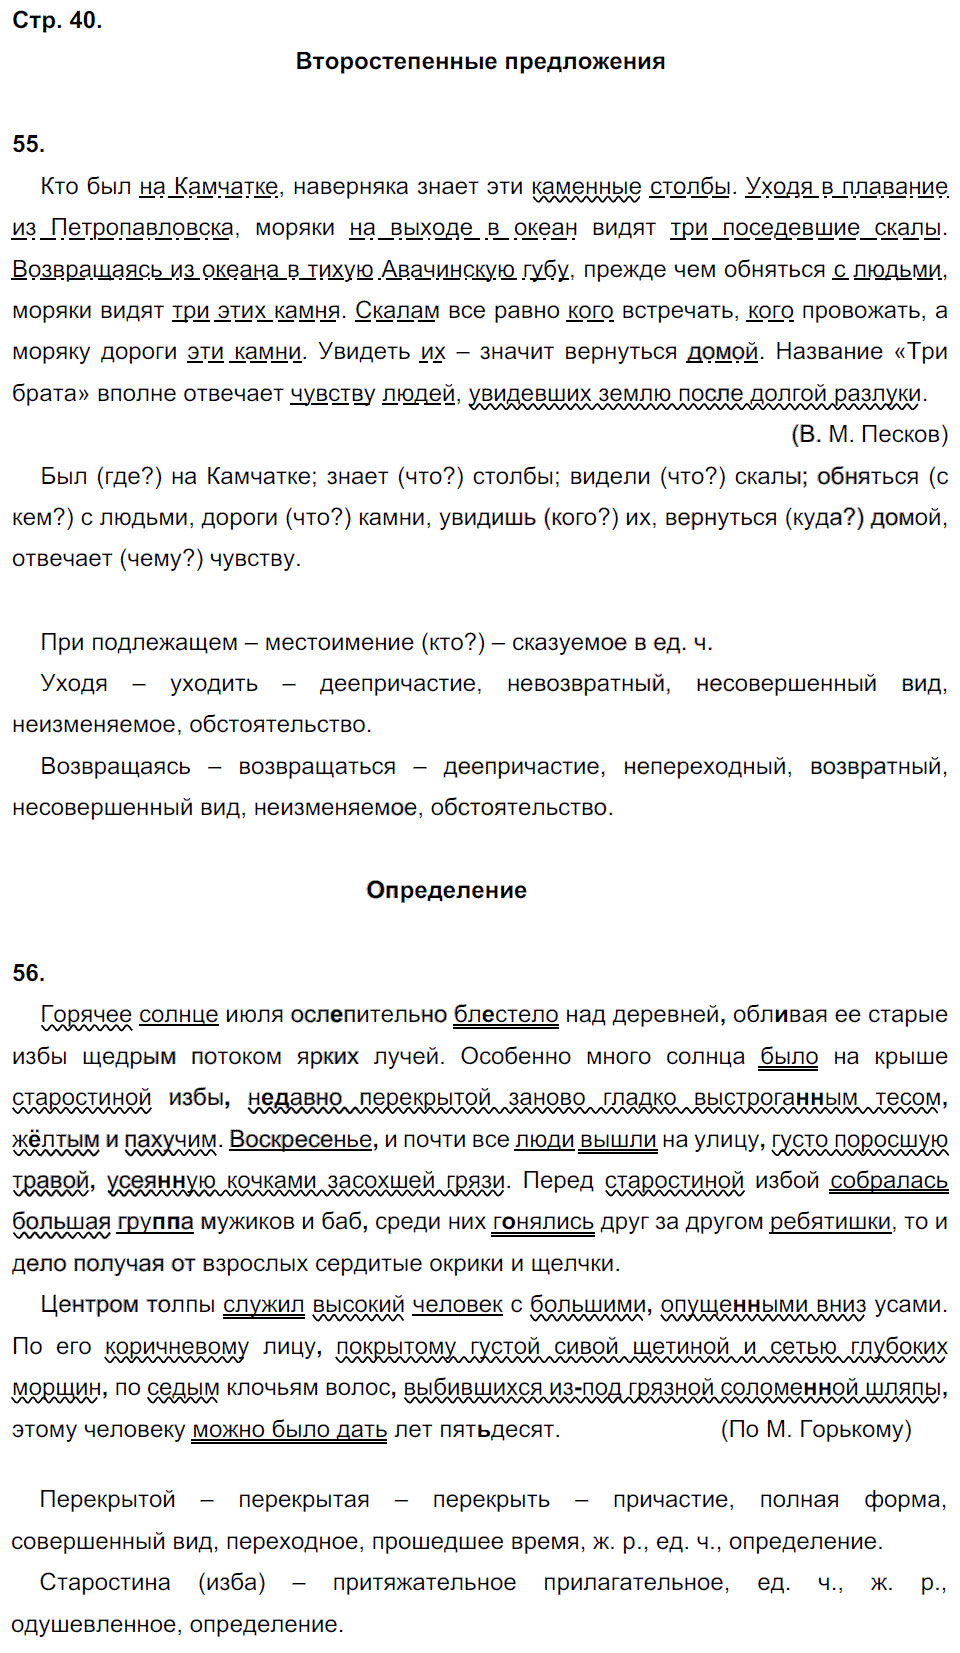 гдз 8 класс рабочая тетрадь страница 40 русский язык Кулаева